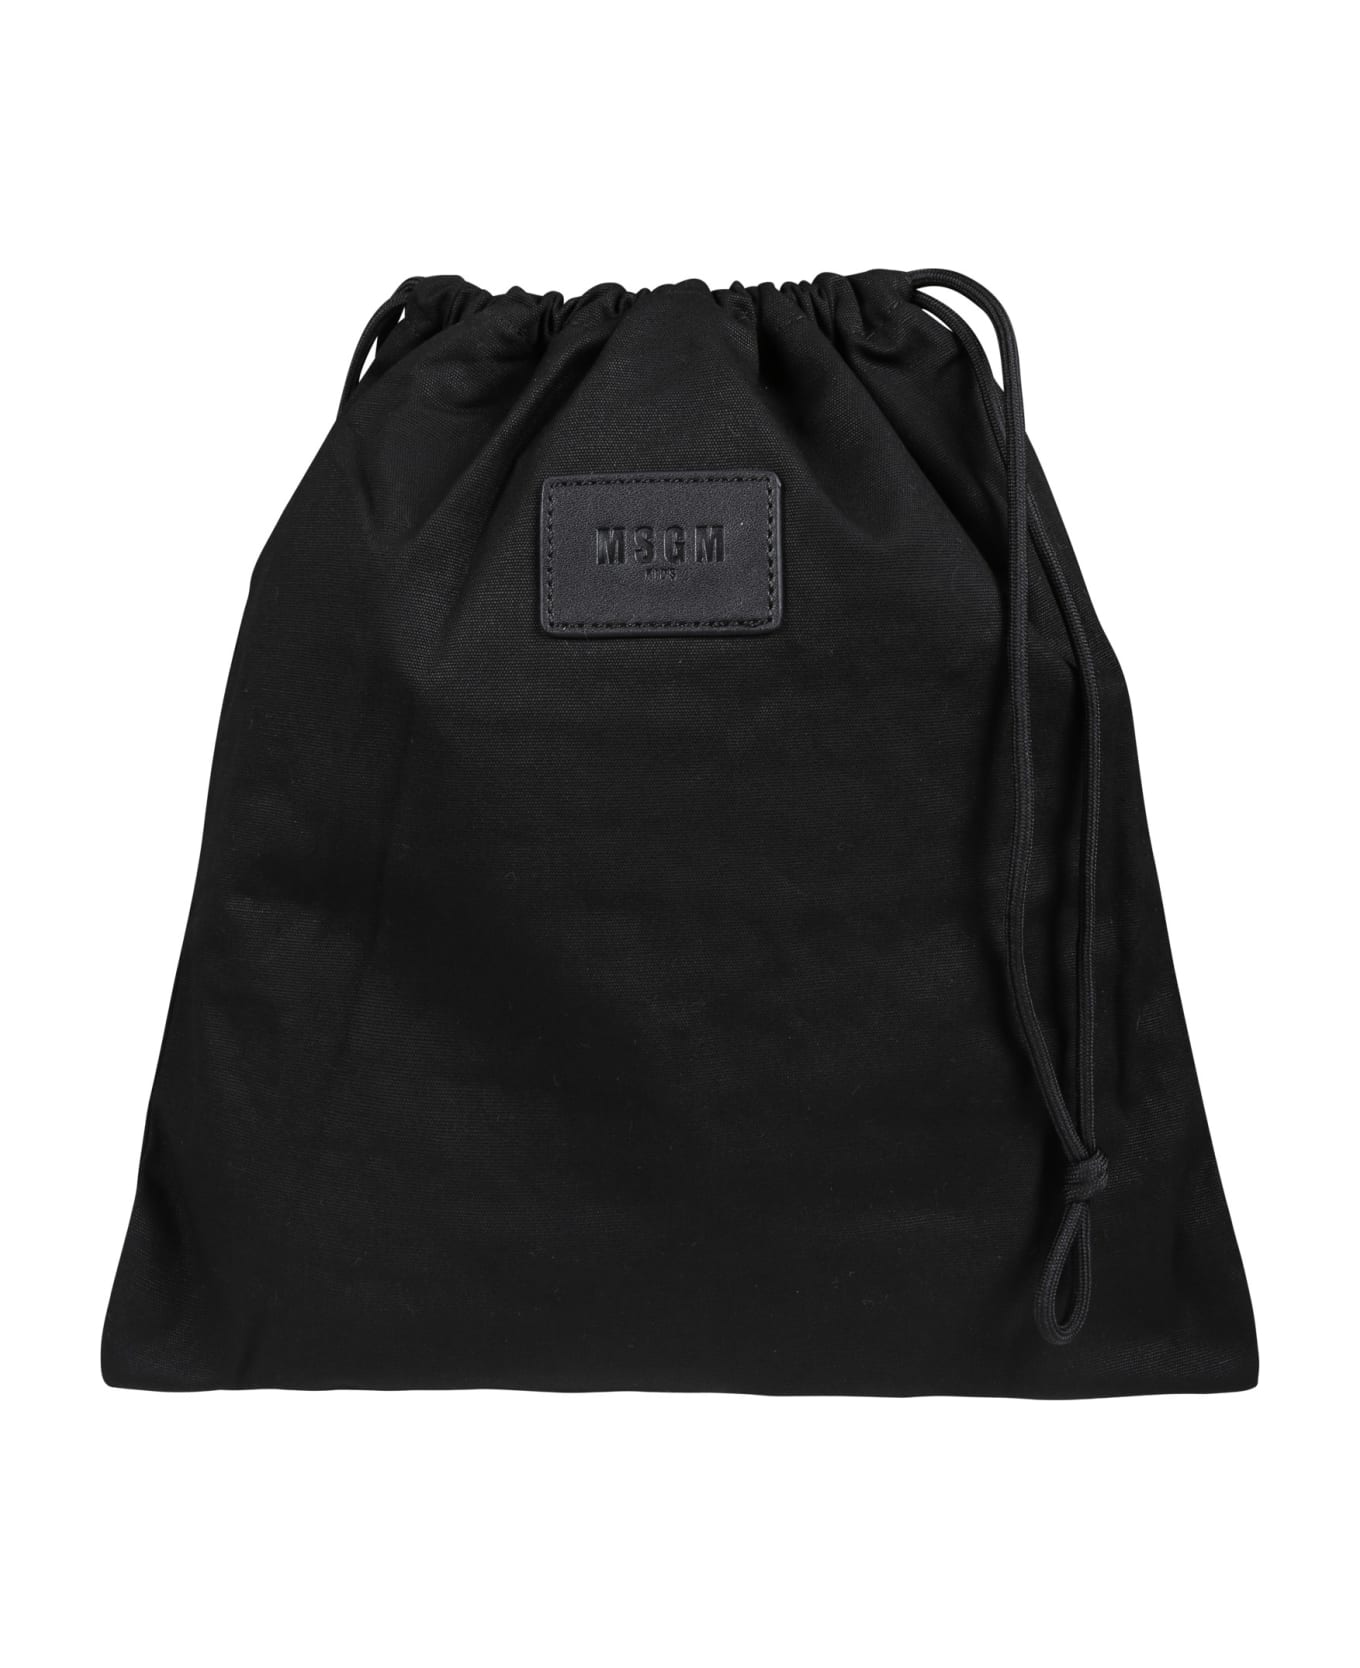 MSGM Black Bag For Girl With Logo - Black